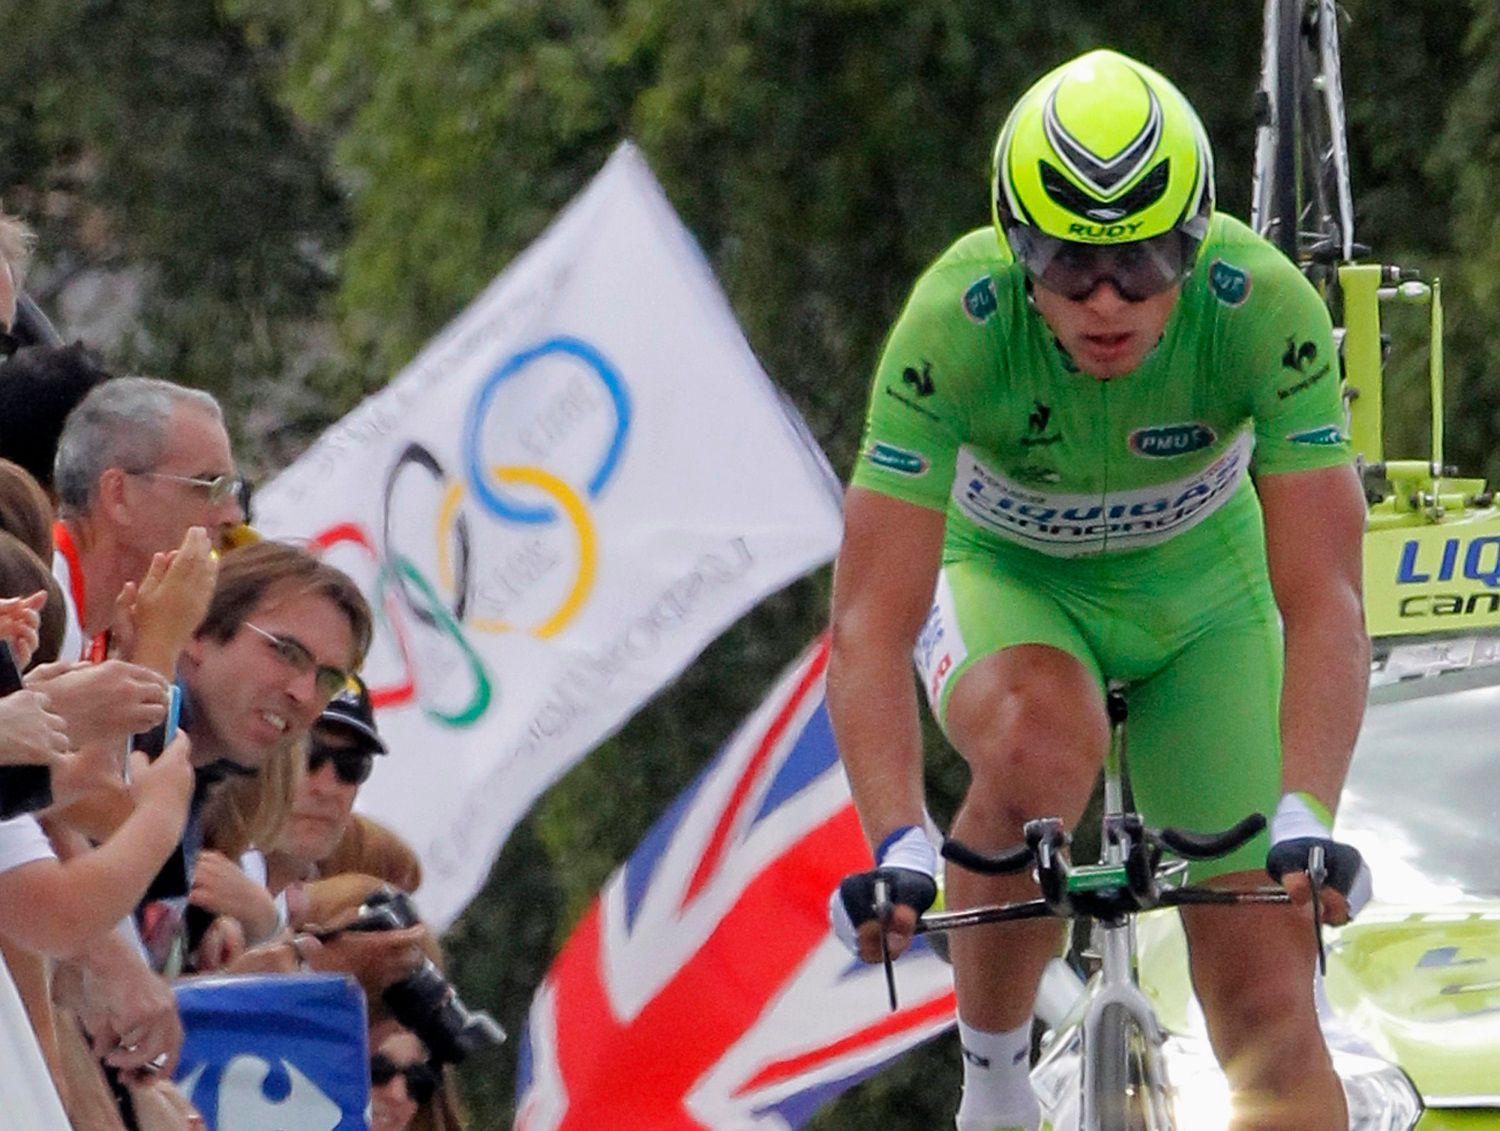 Slovenský cyklista Peter Sagan ze stáje Liquigas-Cannondale jede 19. etapu Tour de France 2012.